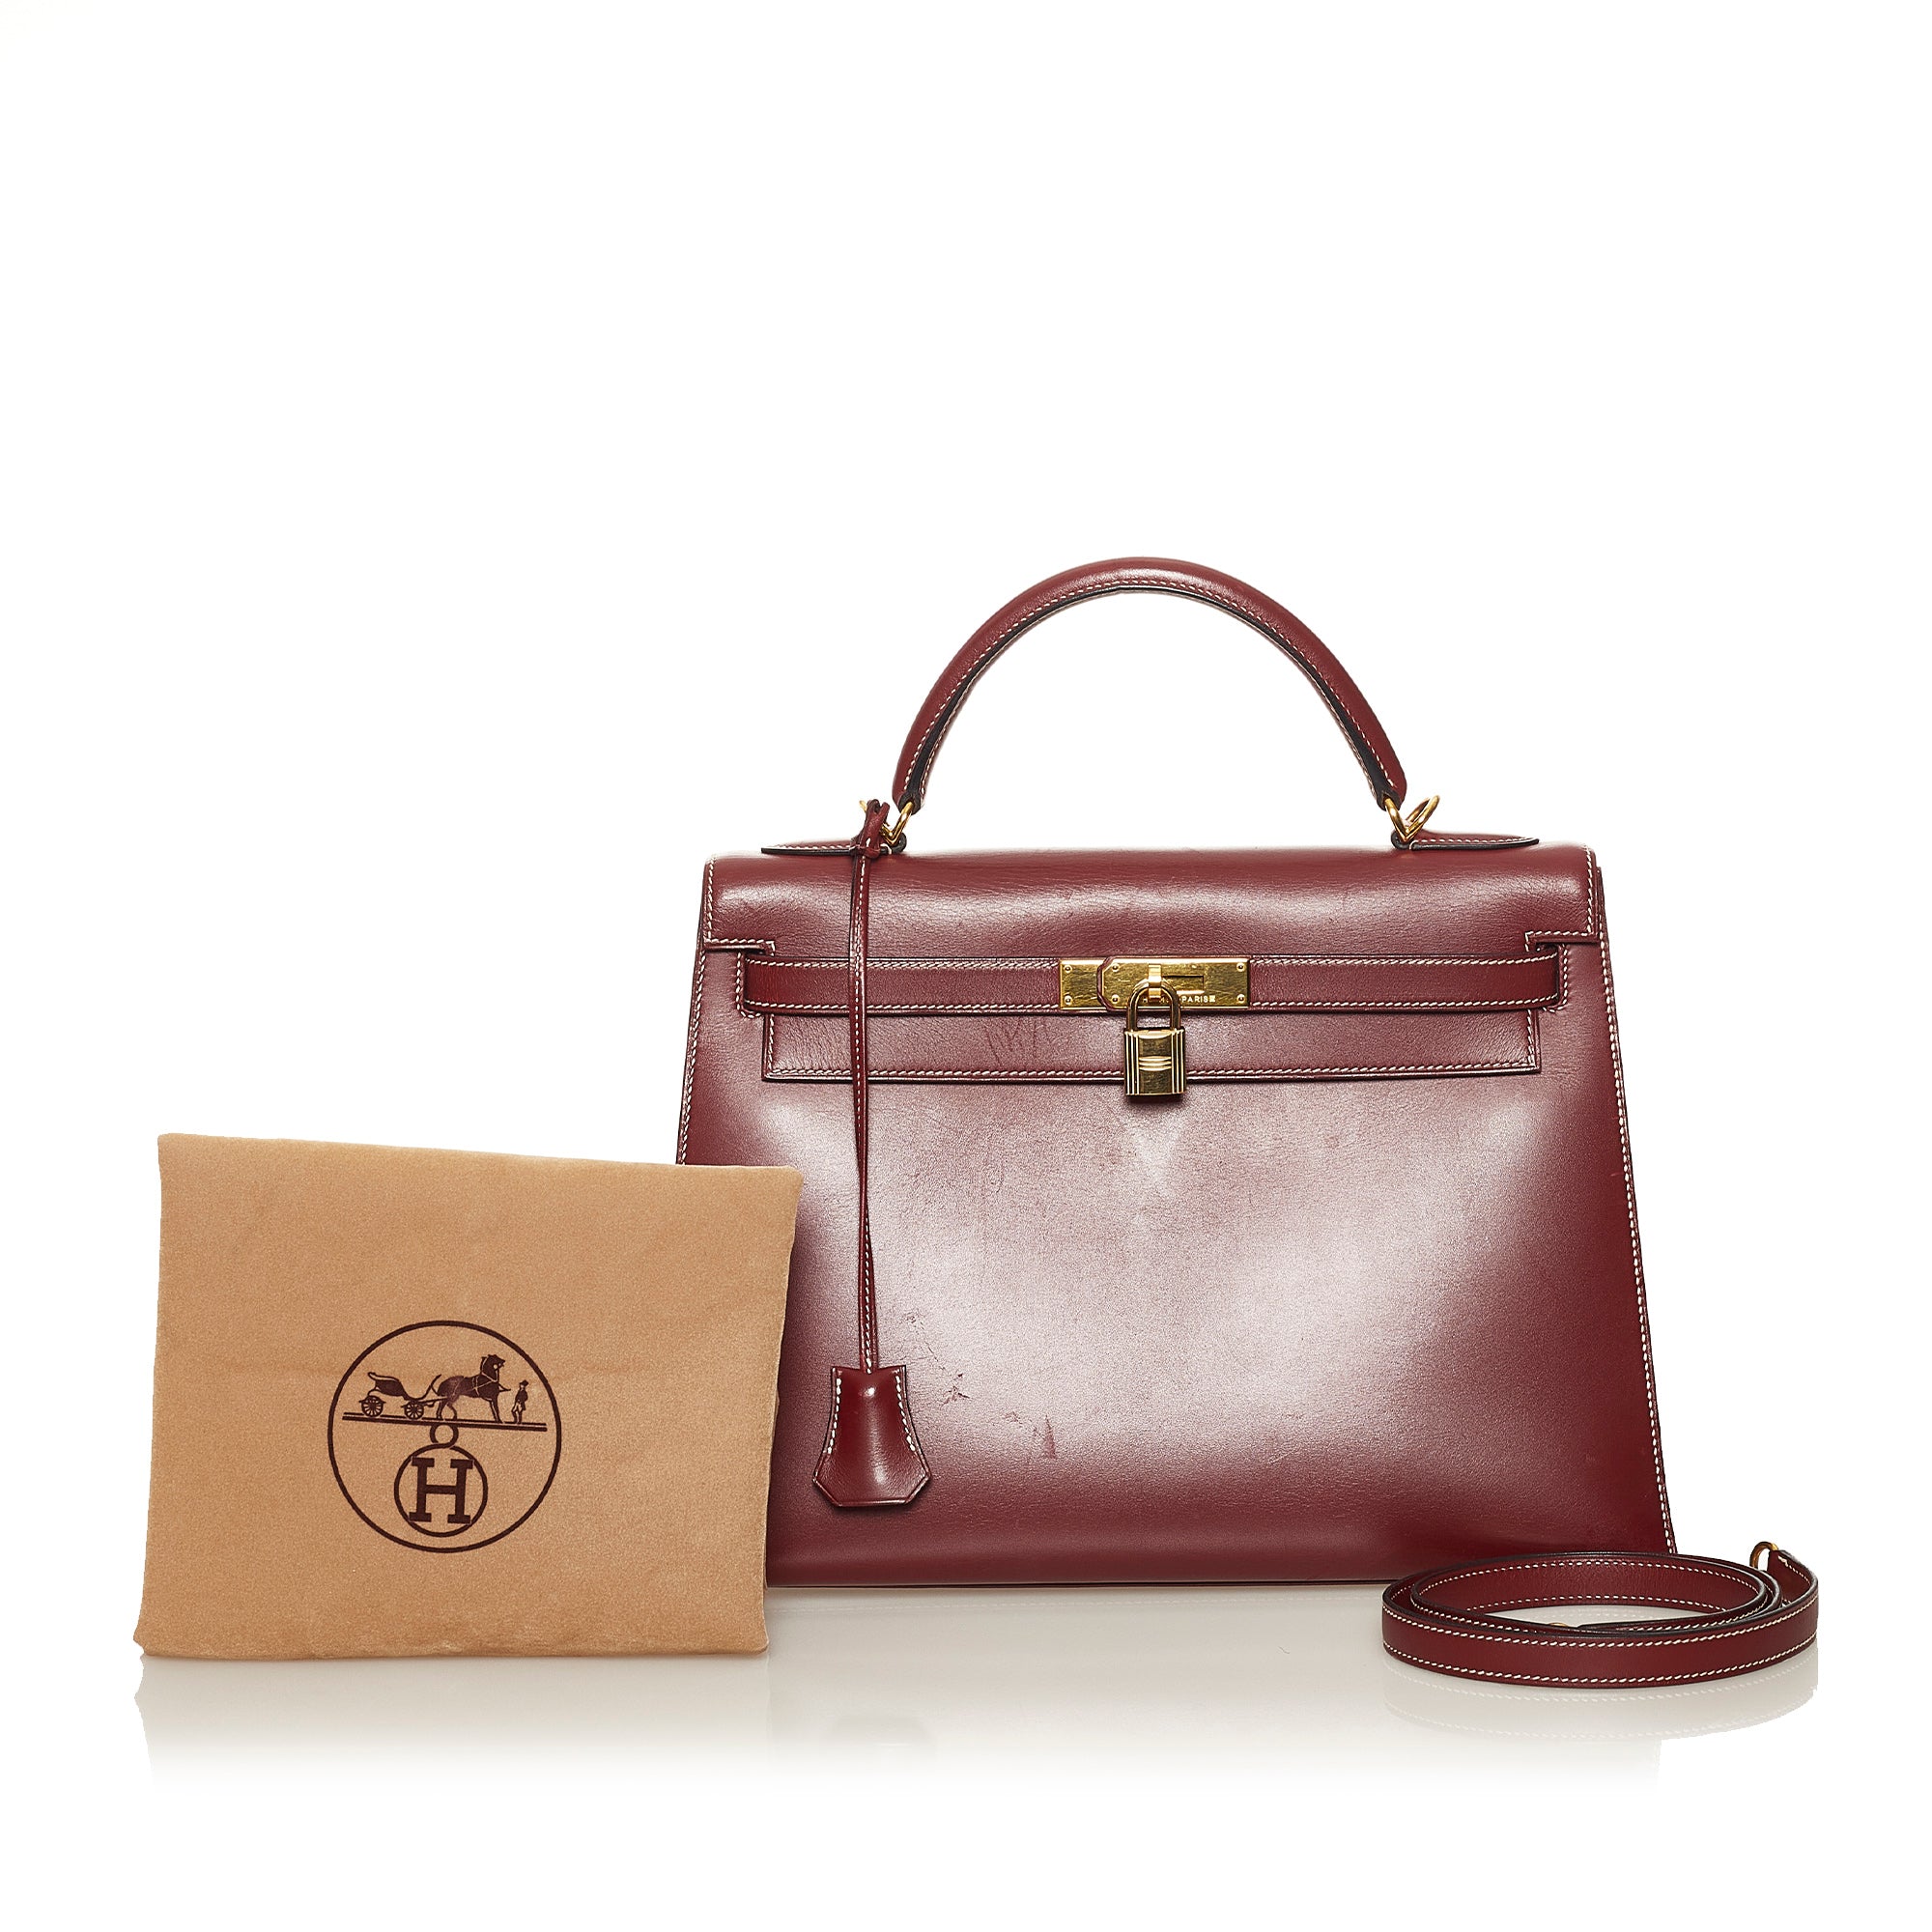 Amazing Hermes Kelly 28 sellier handbag strap in Rouge H box calf